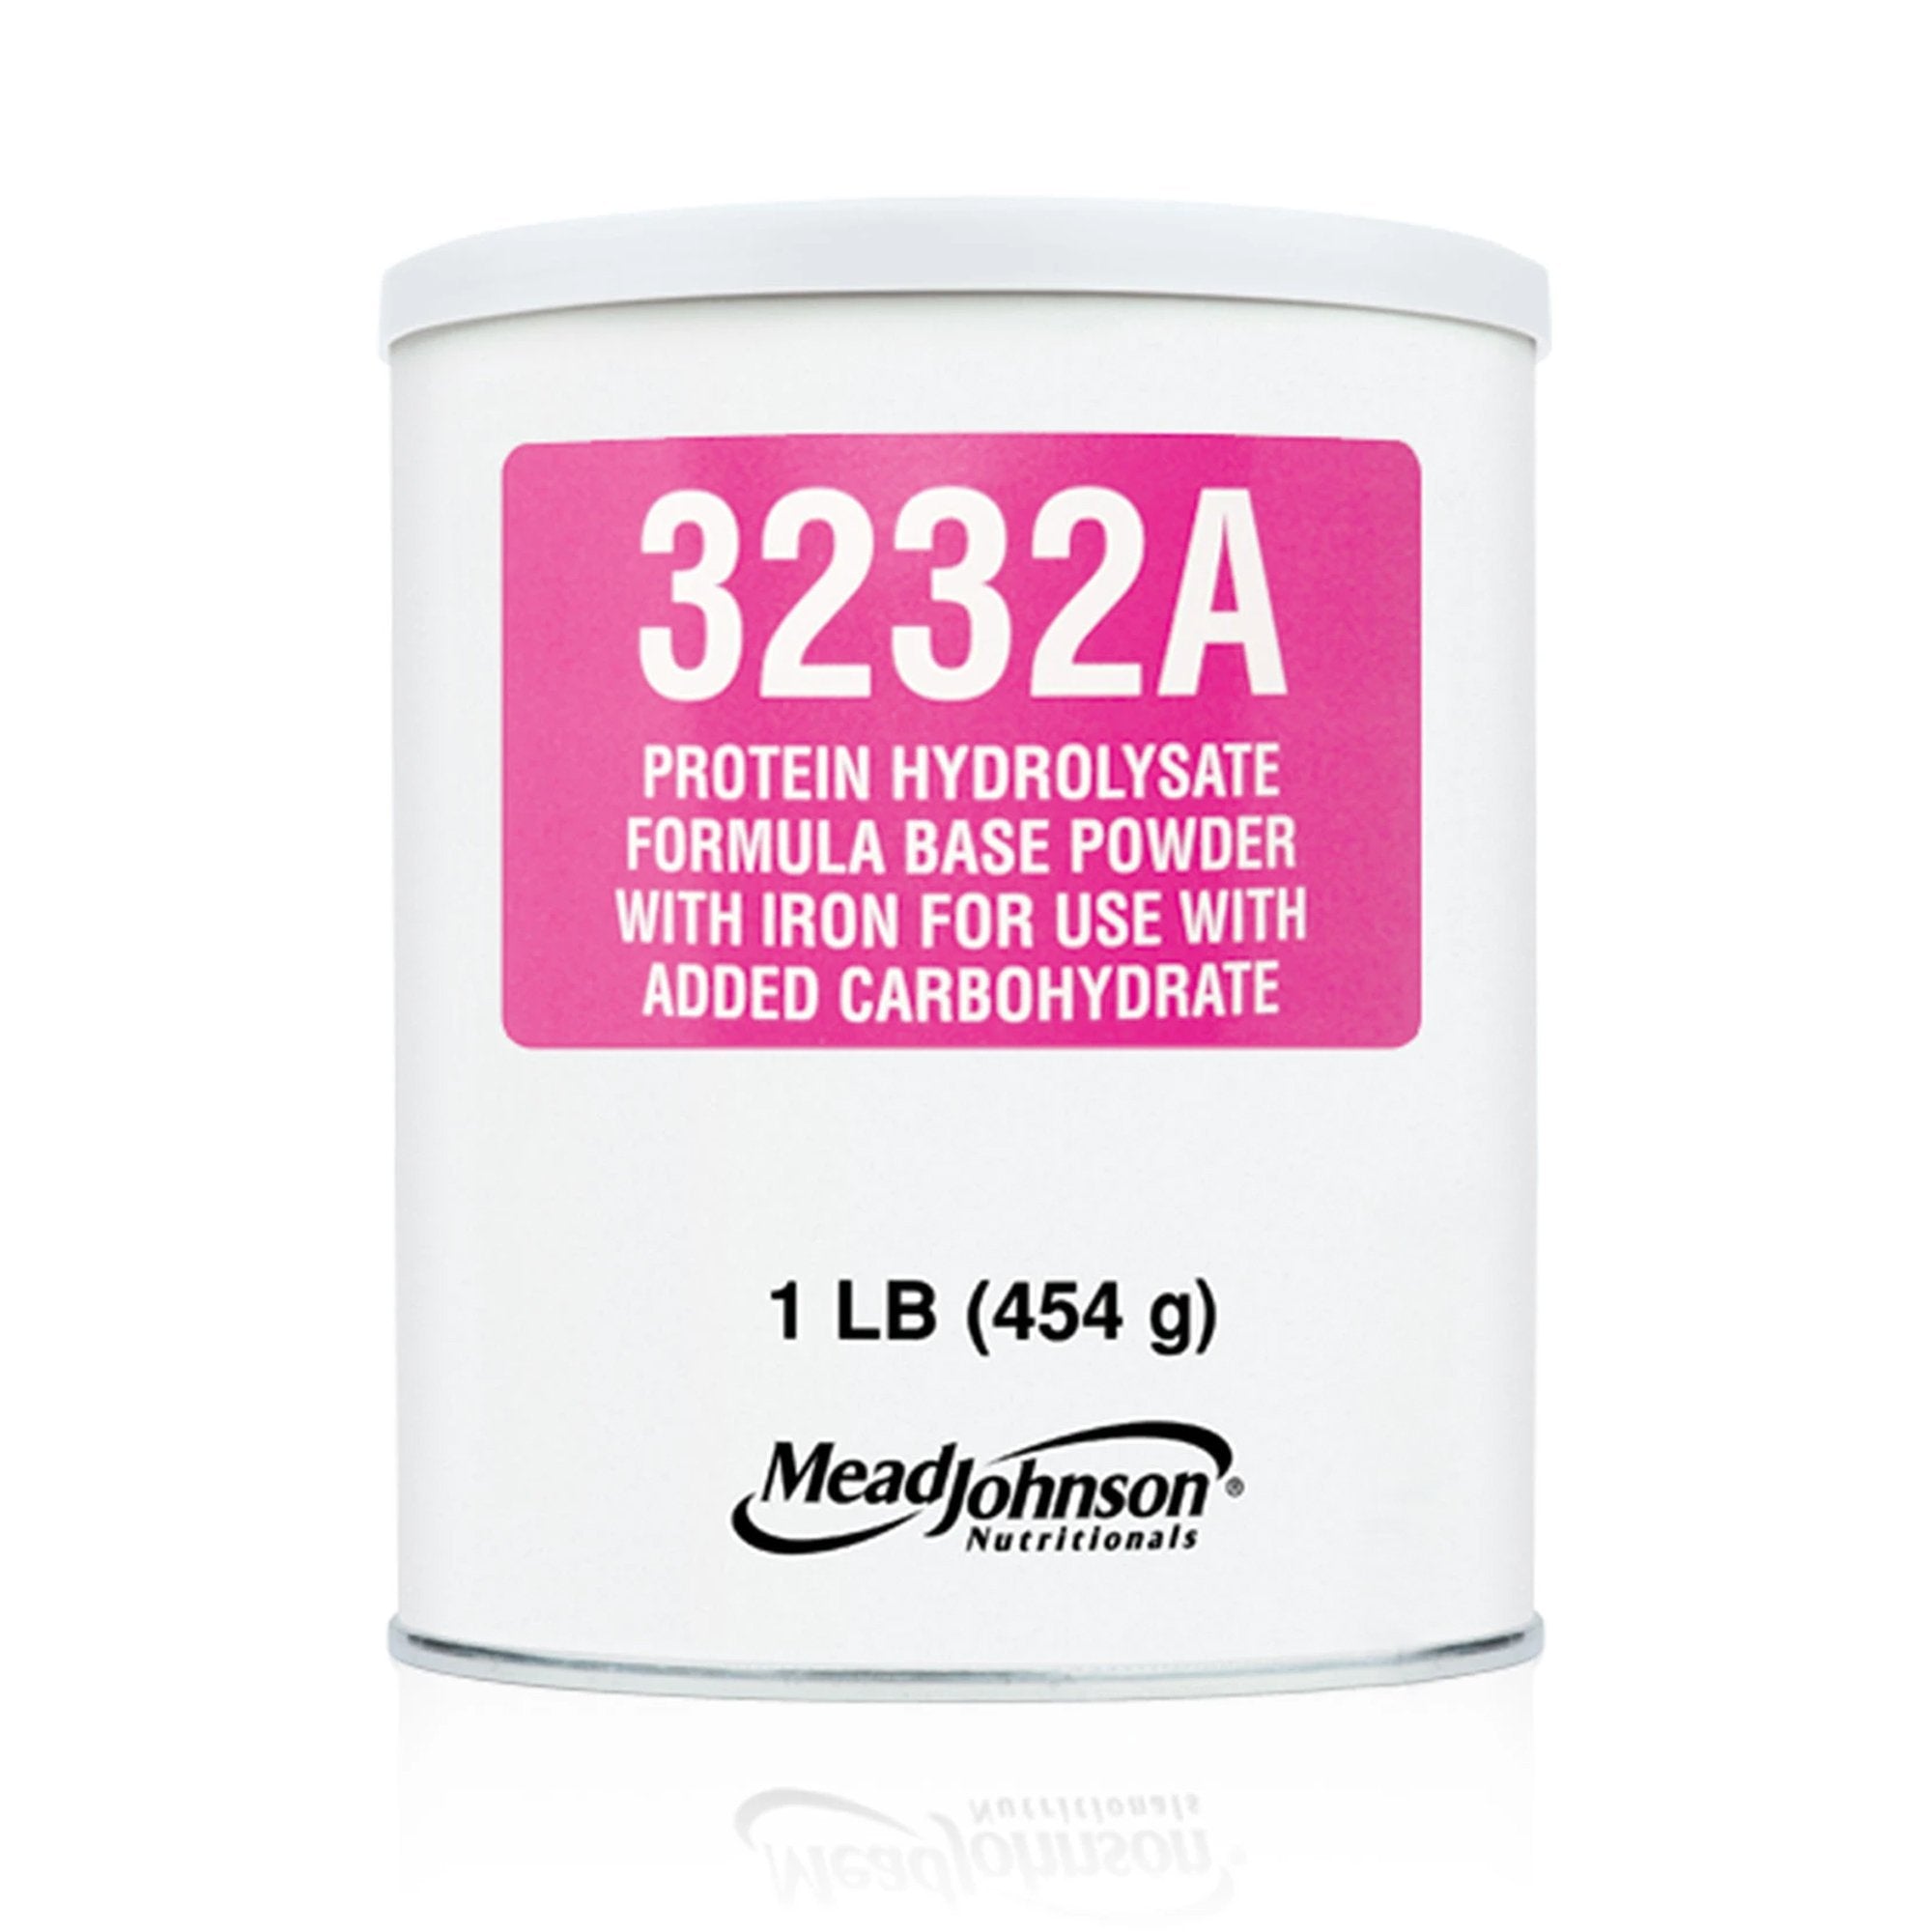 3232 A Powder Protein Hydrolysate Formula Oral Supplement, 1 lb.